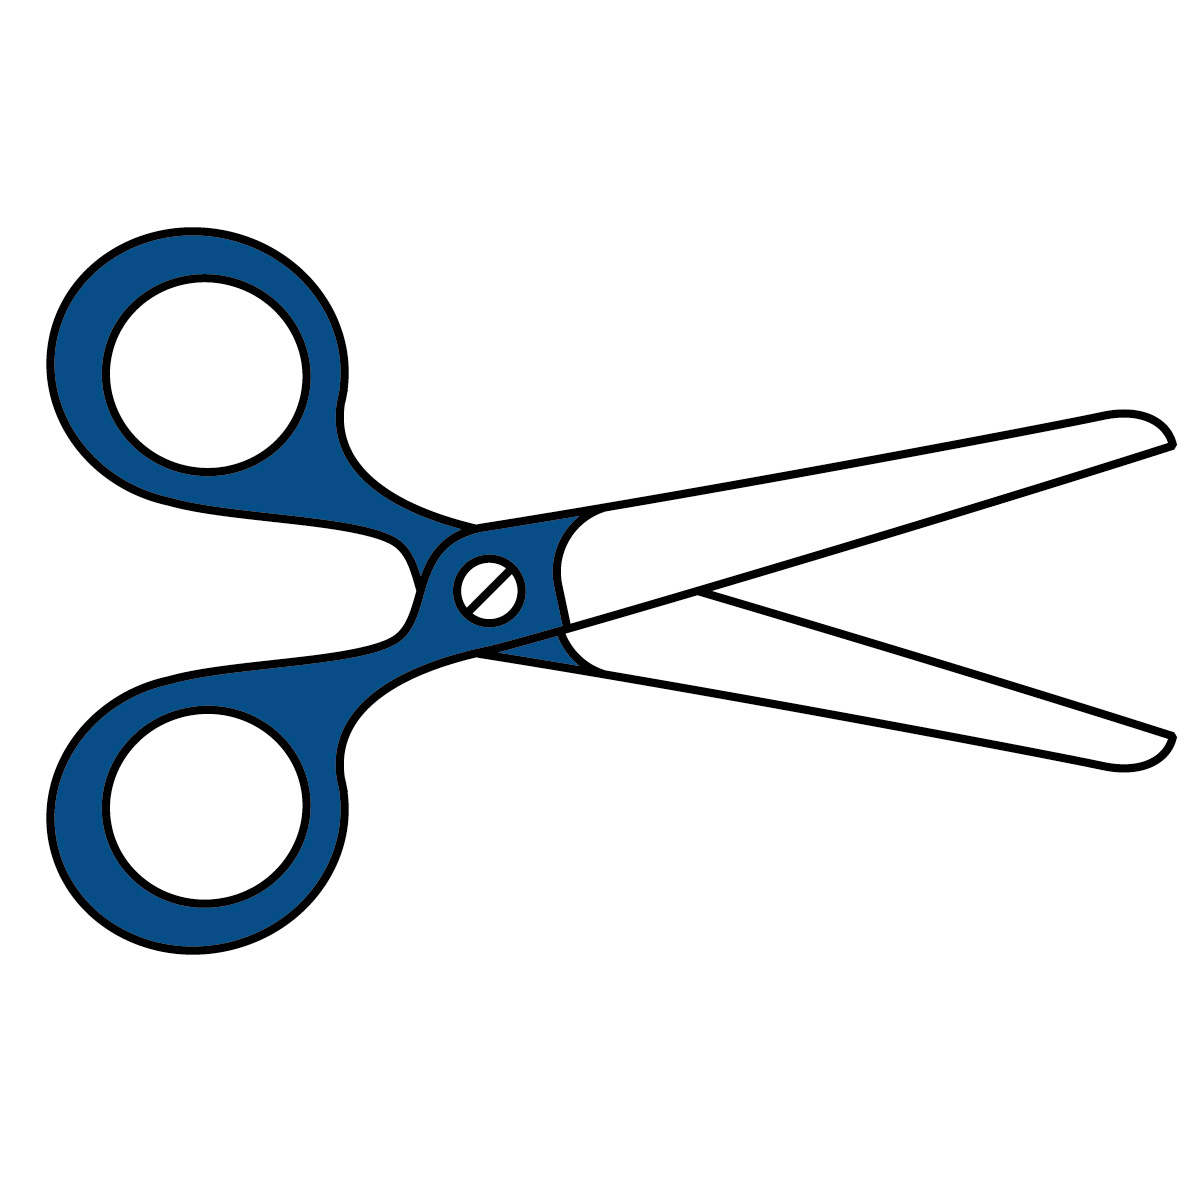 school scissors clip art